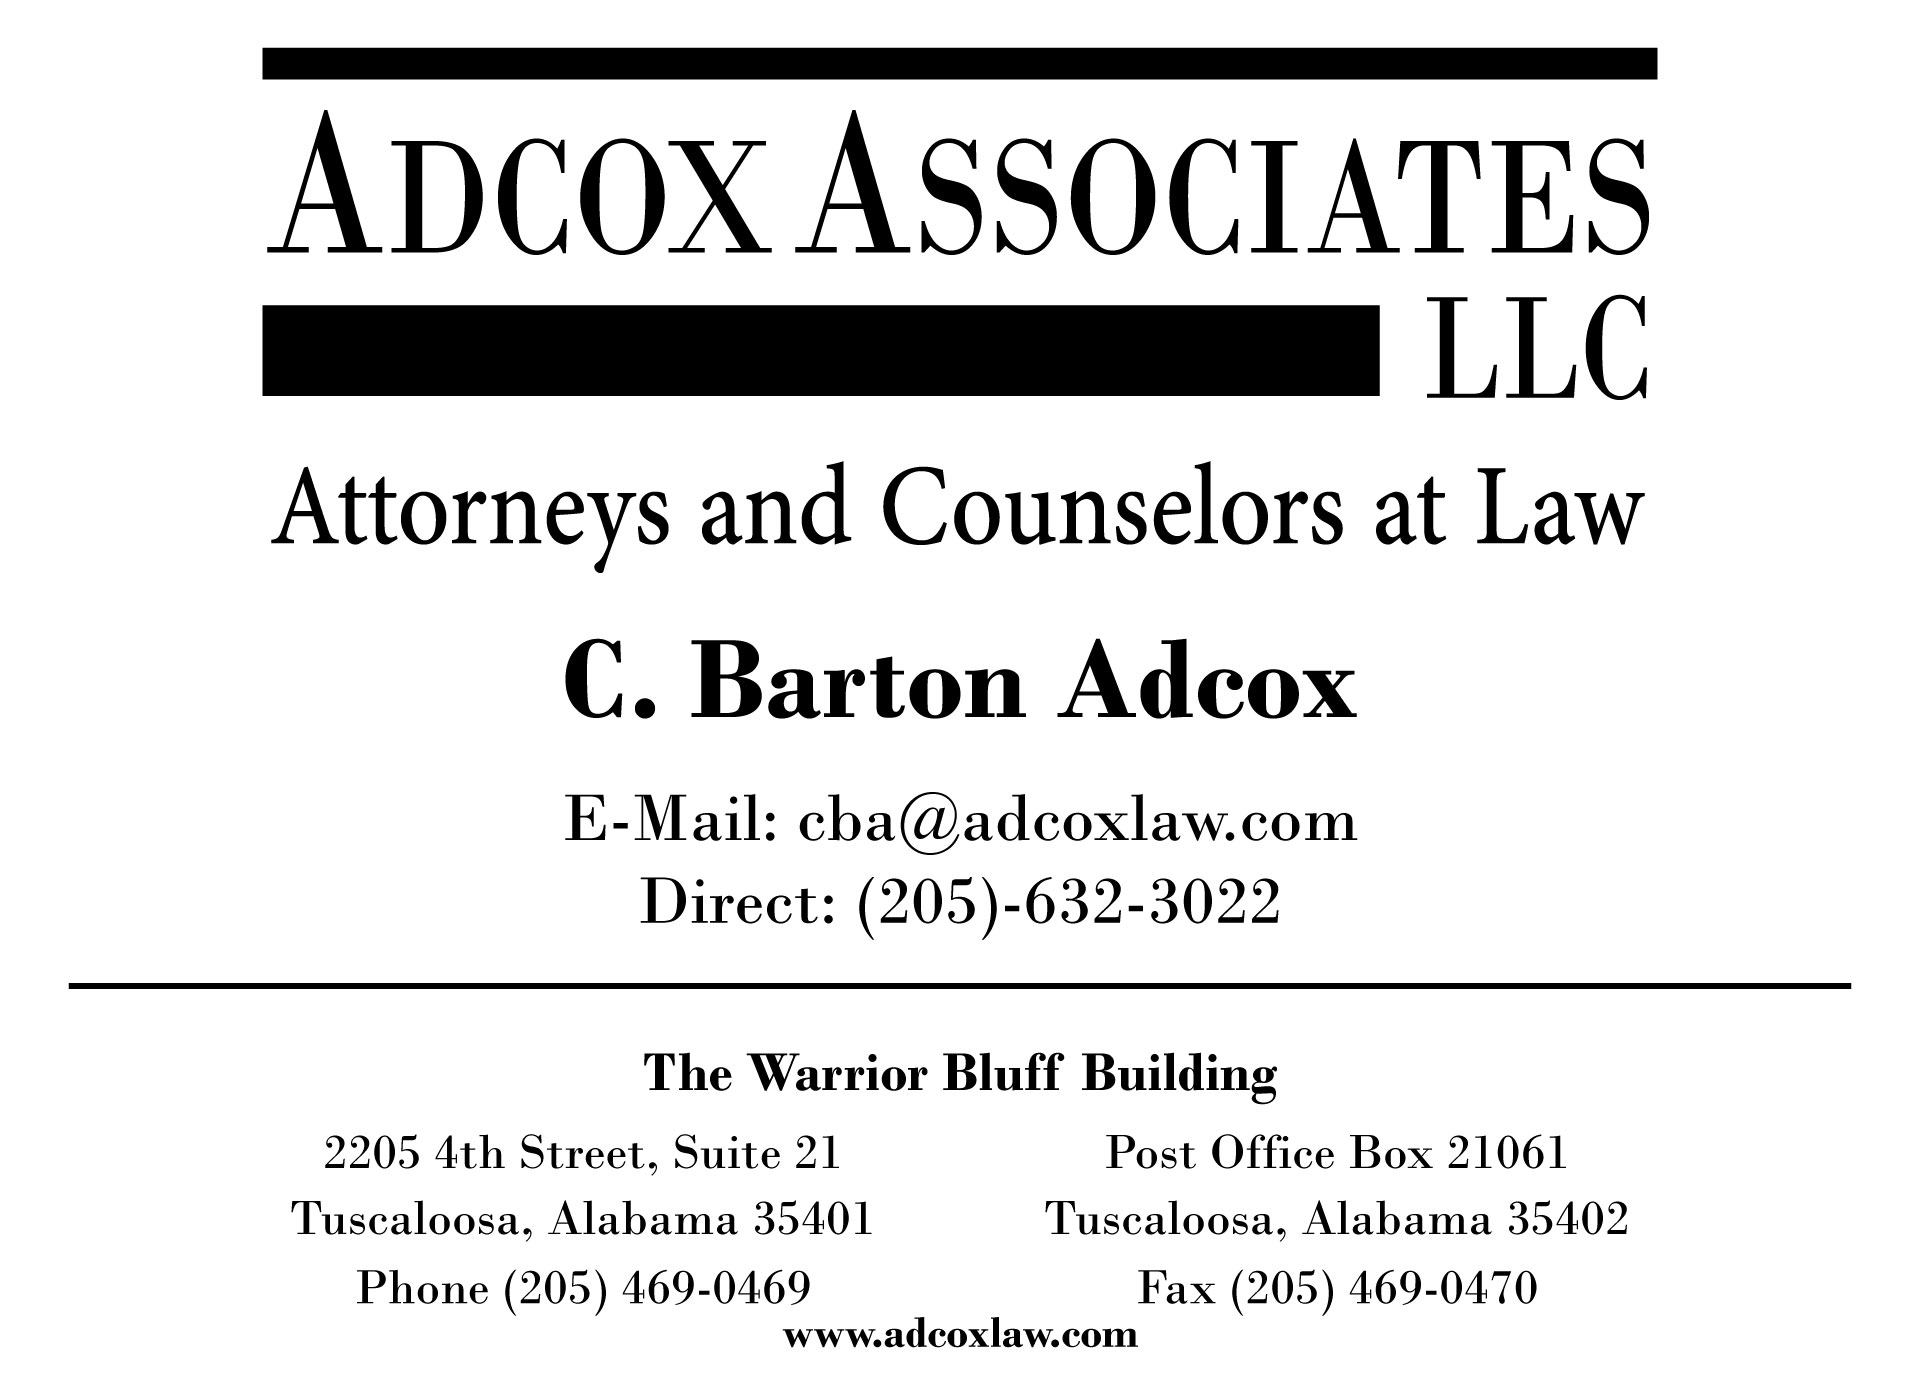 Adcox Associates, LLC